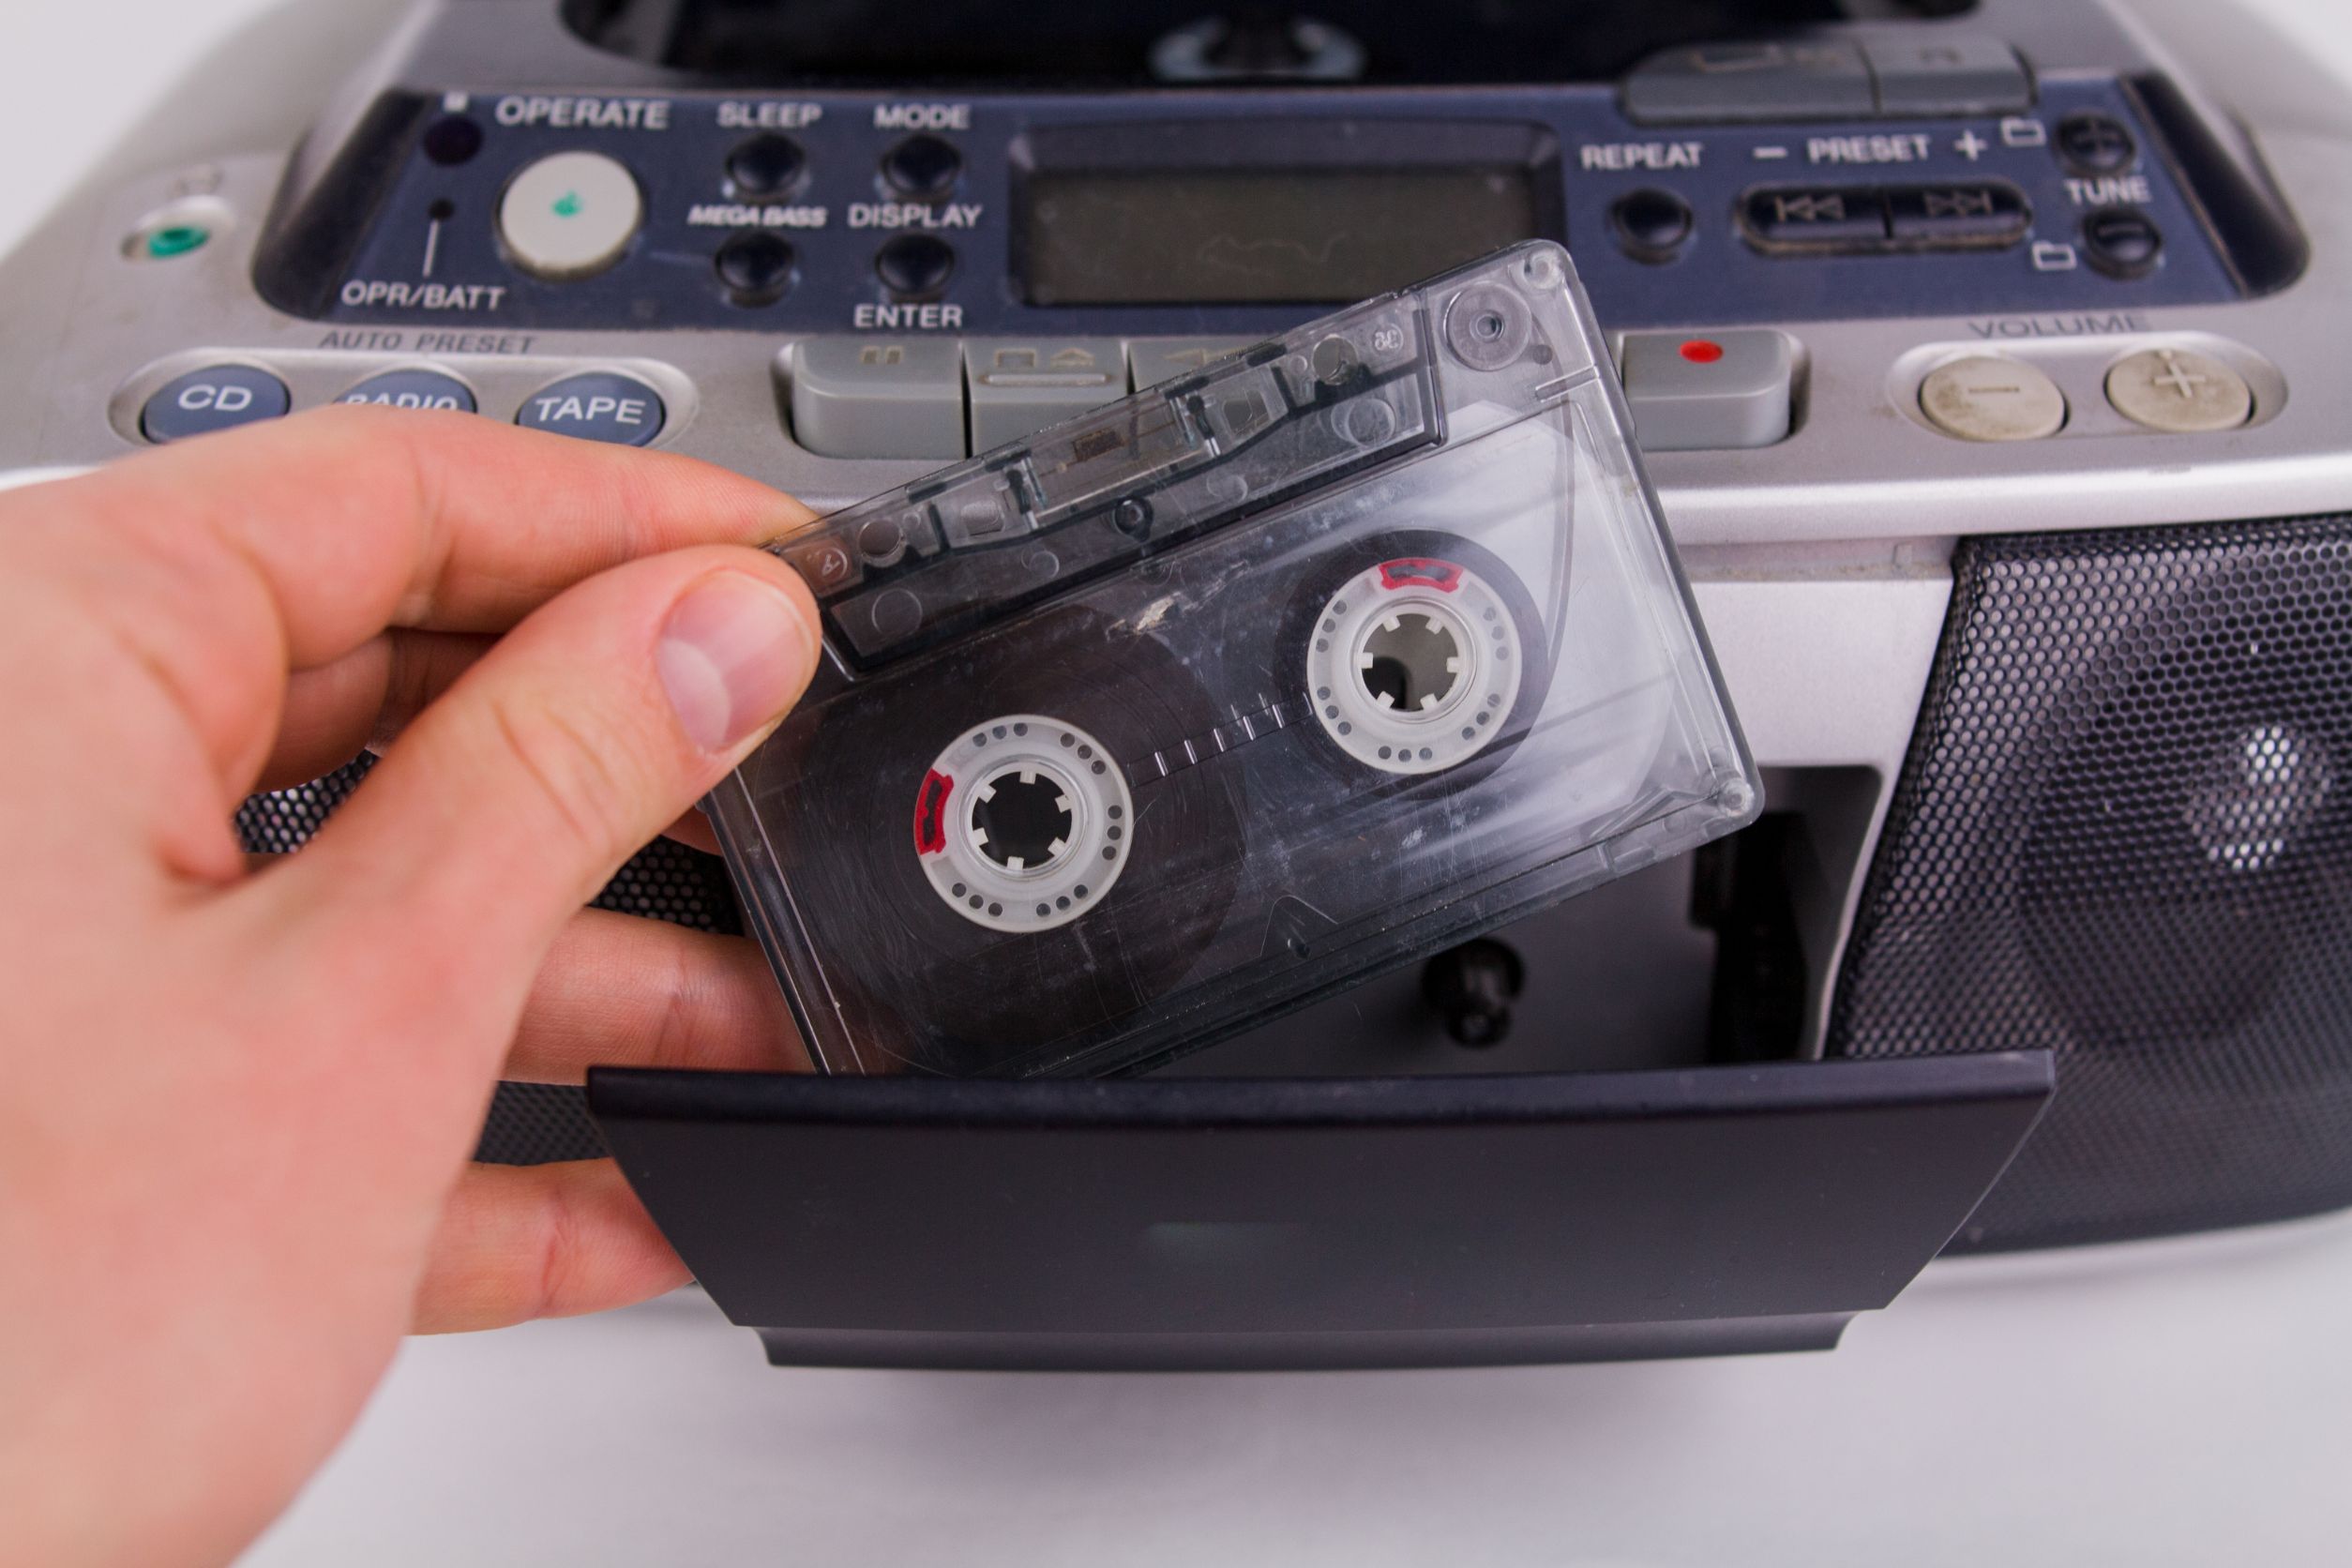 Cassette Players